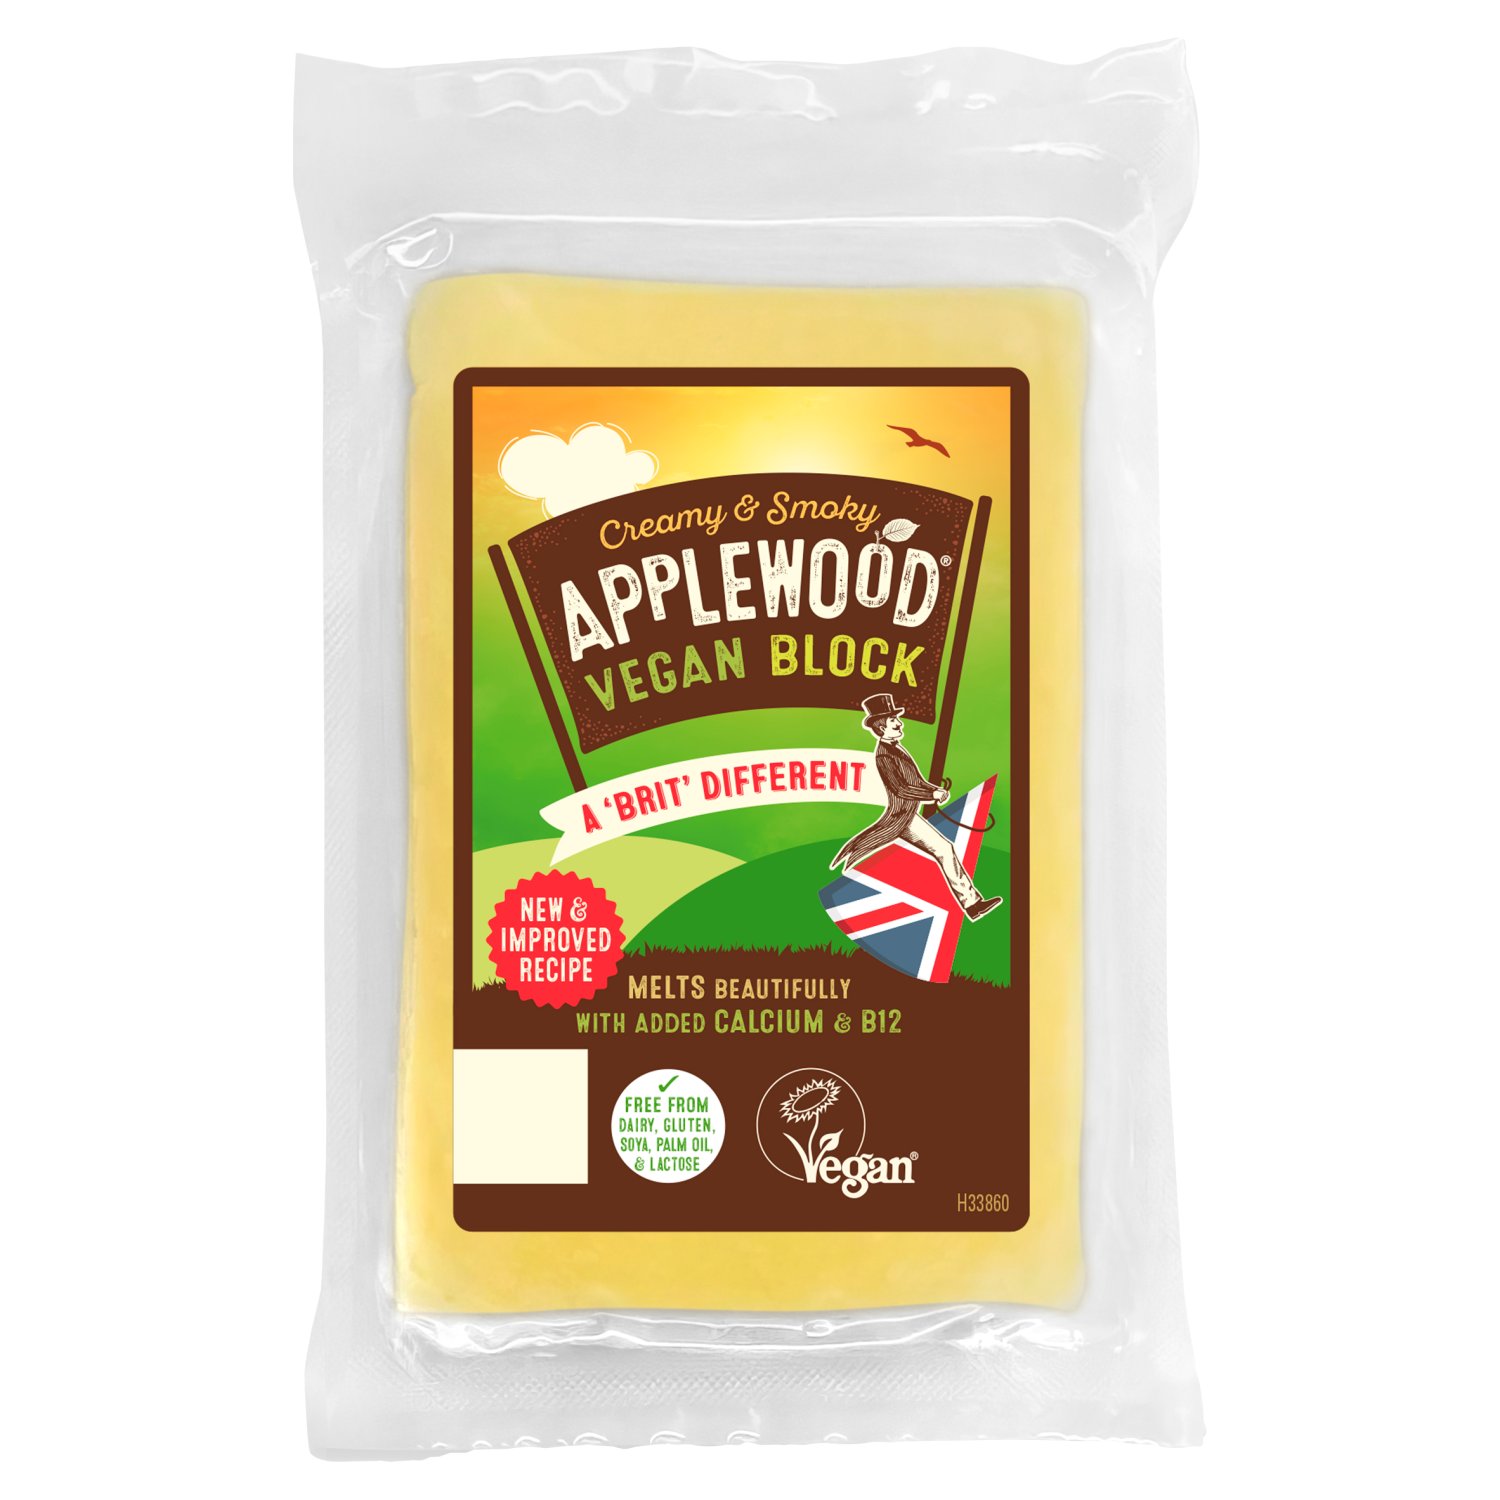 Applewood Vegan Deliciously Smoky (200 g)